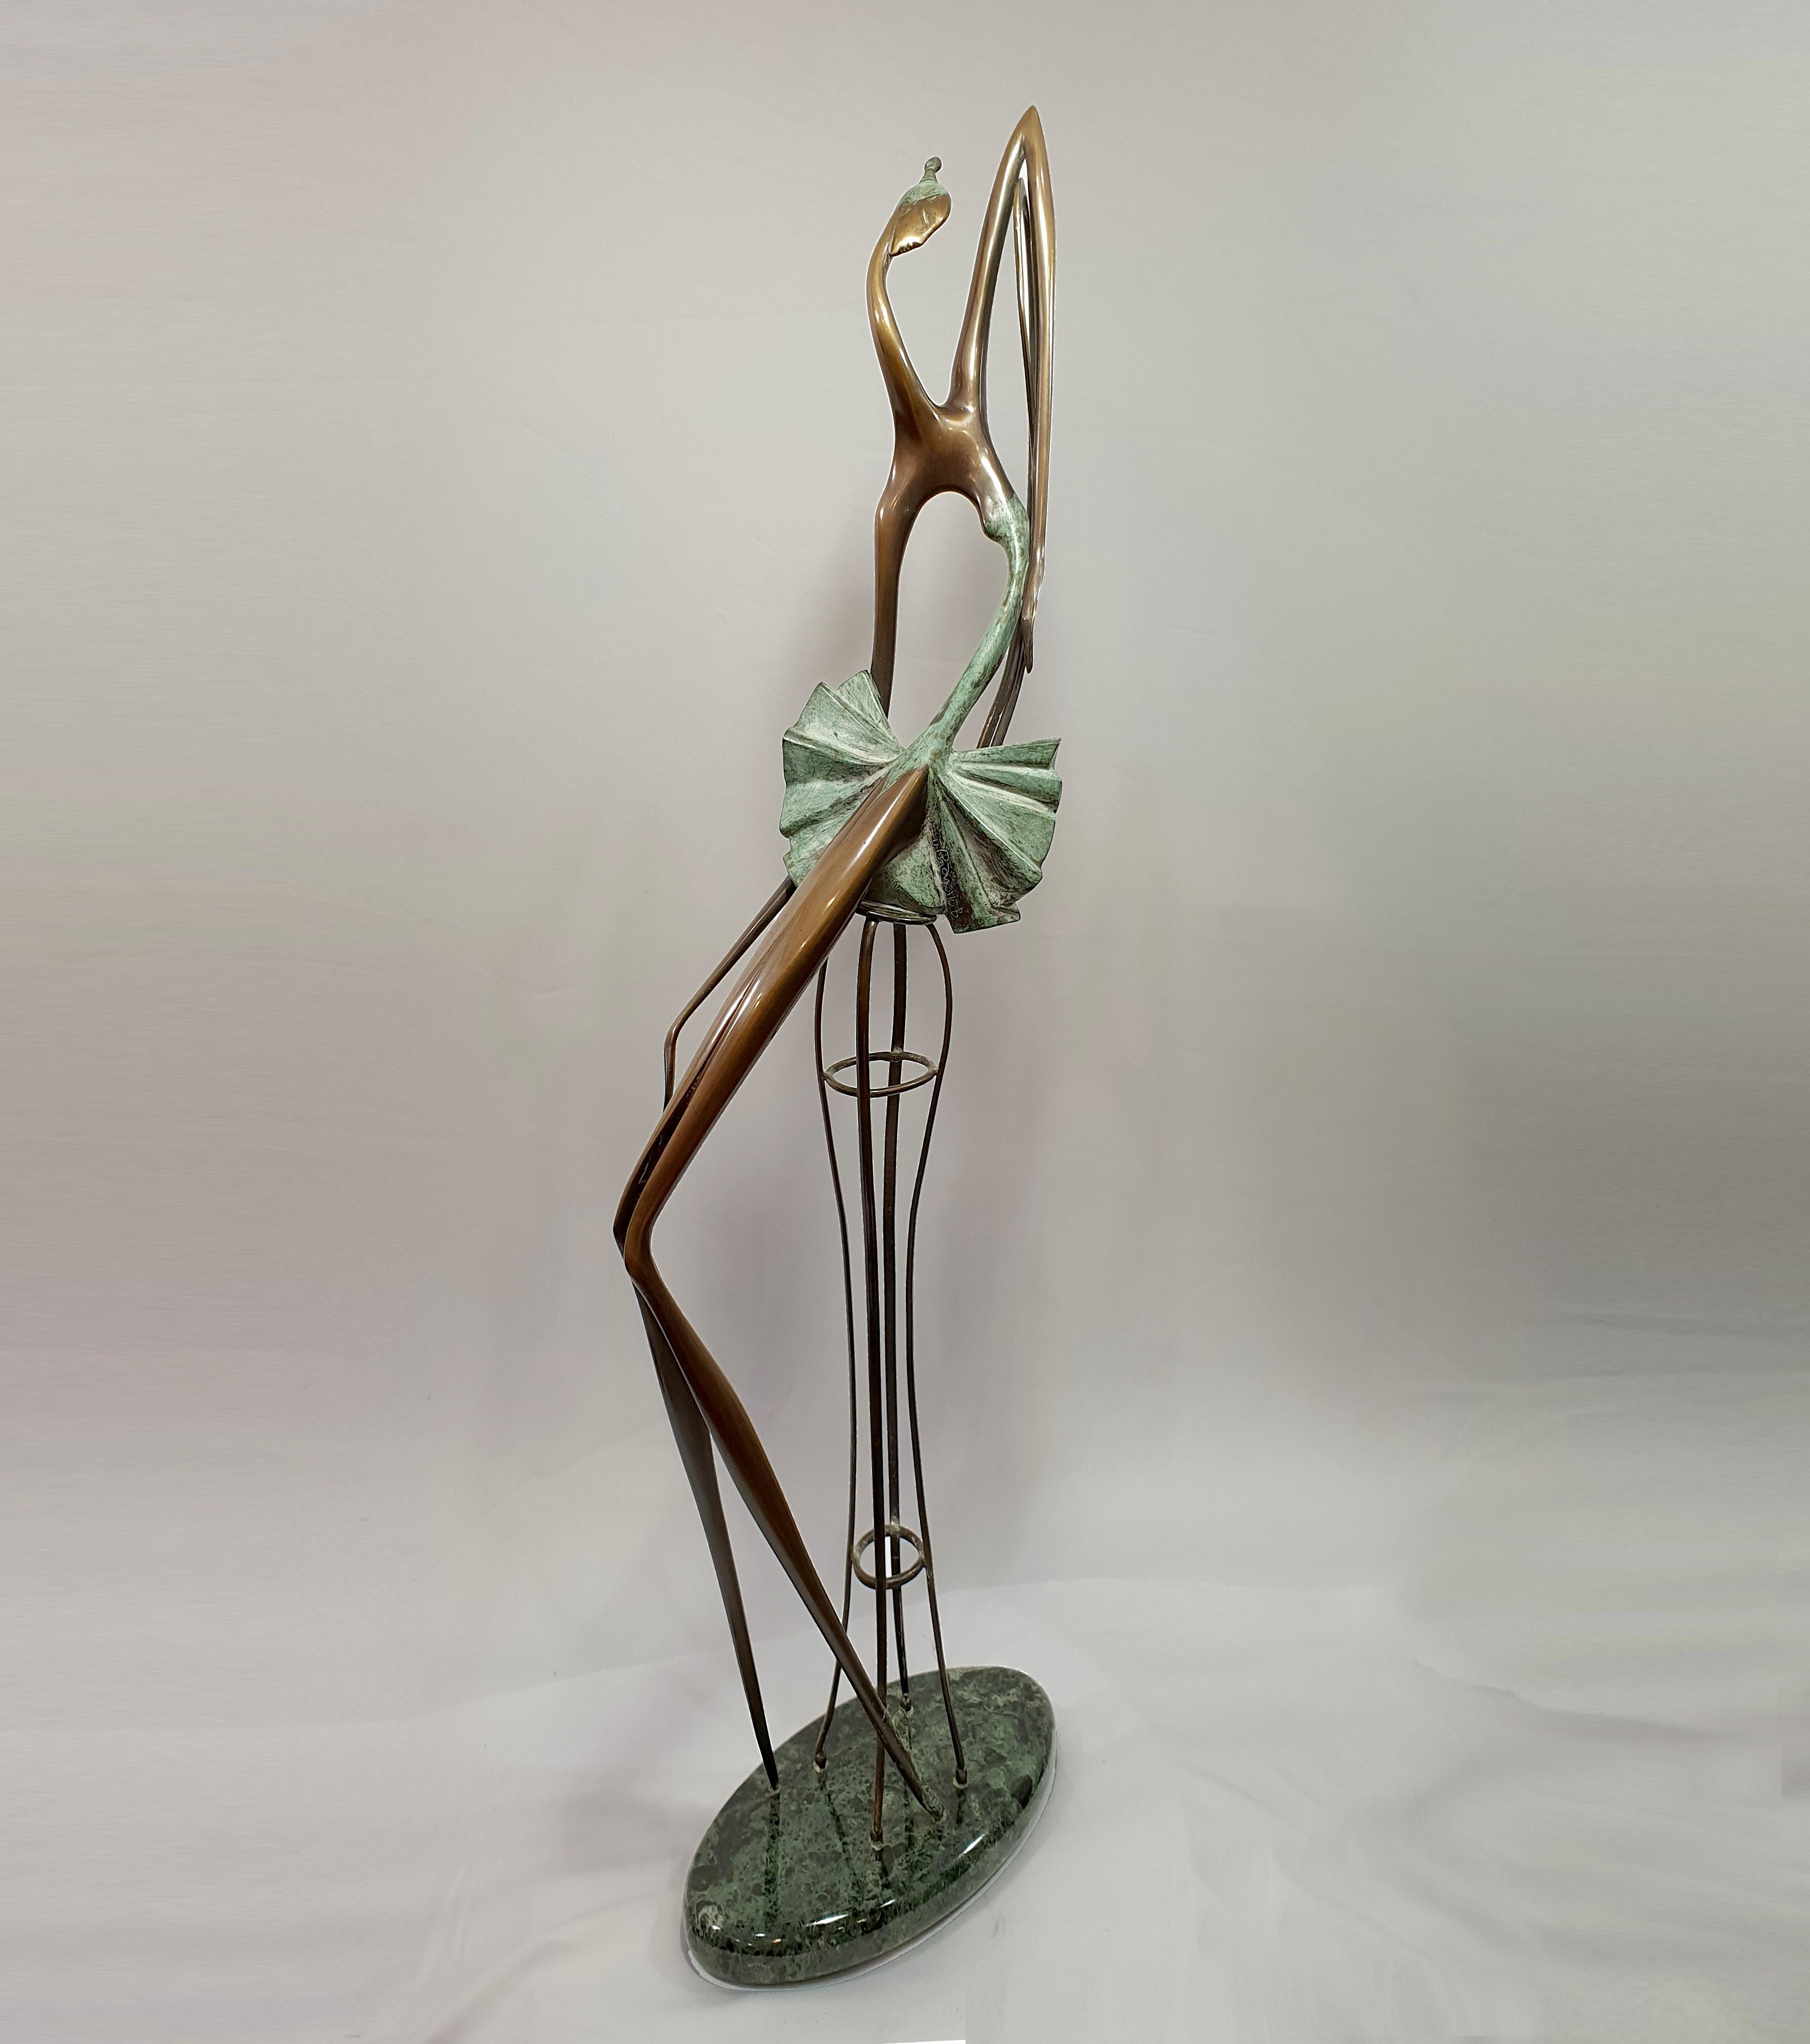 Alex Radionov Abstract Sculpture - Ballerina on a chair